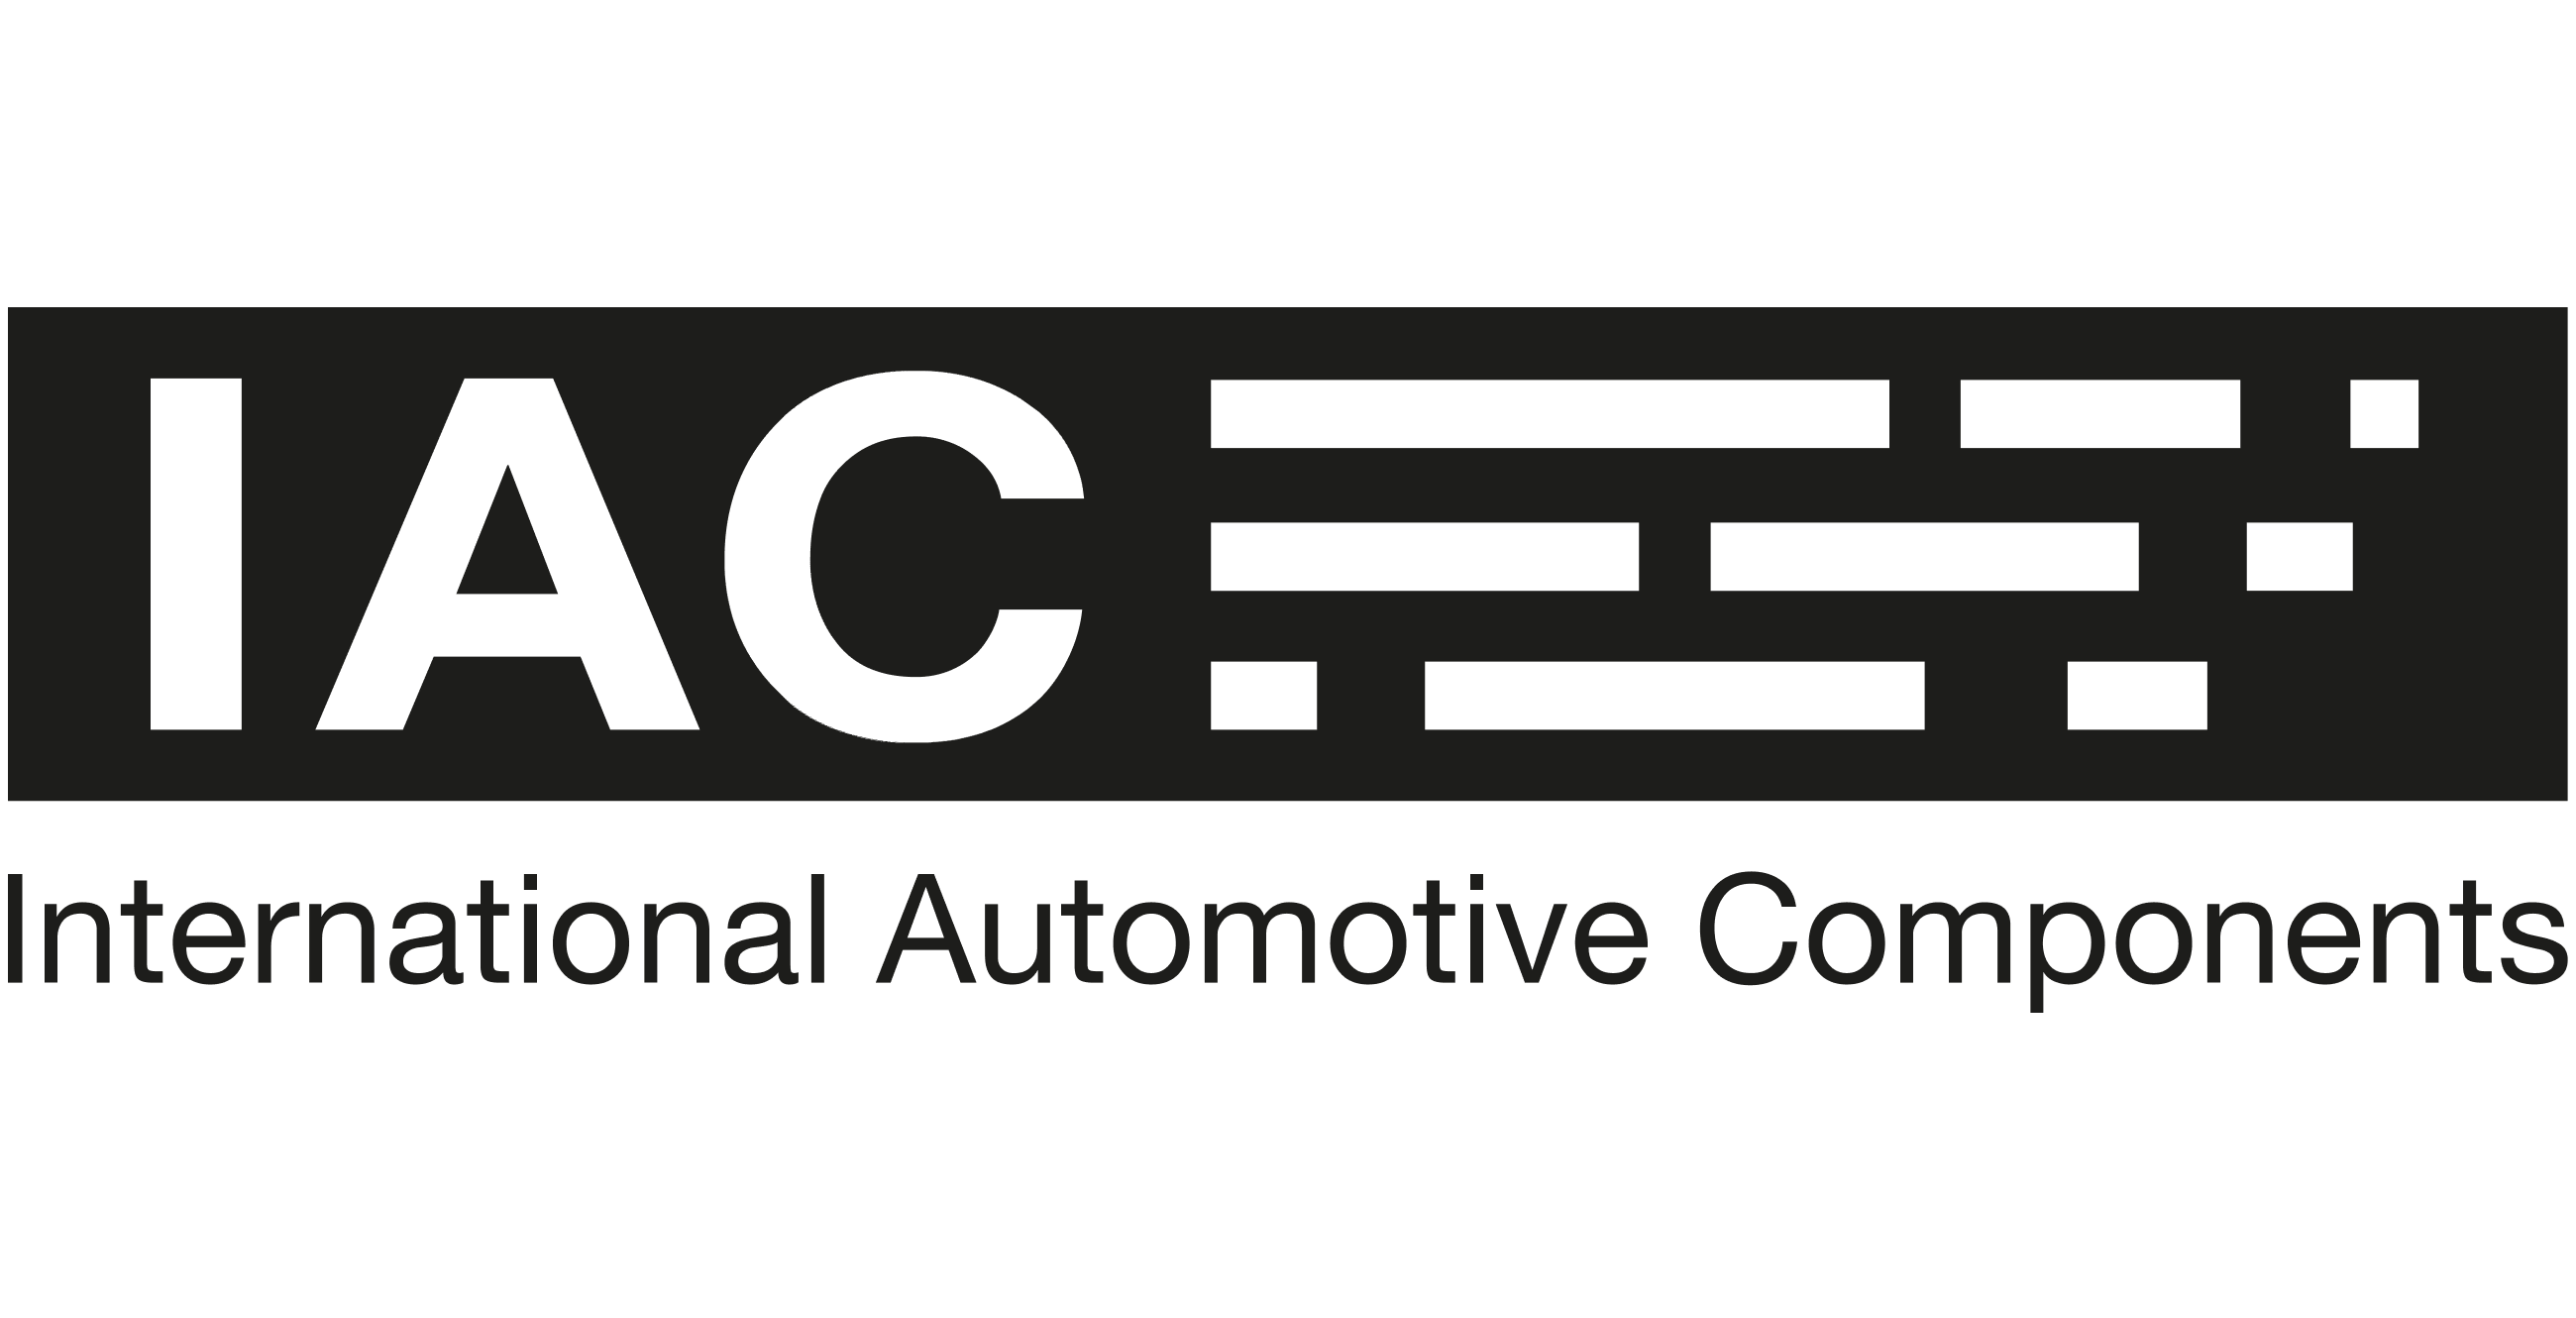 logo-IAC